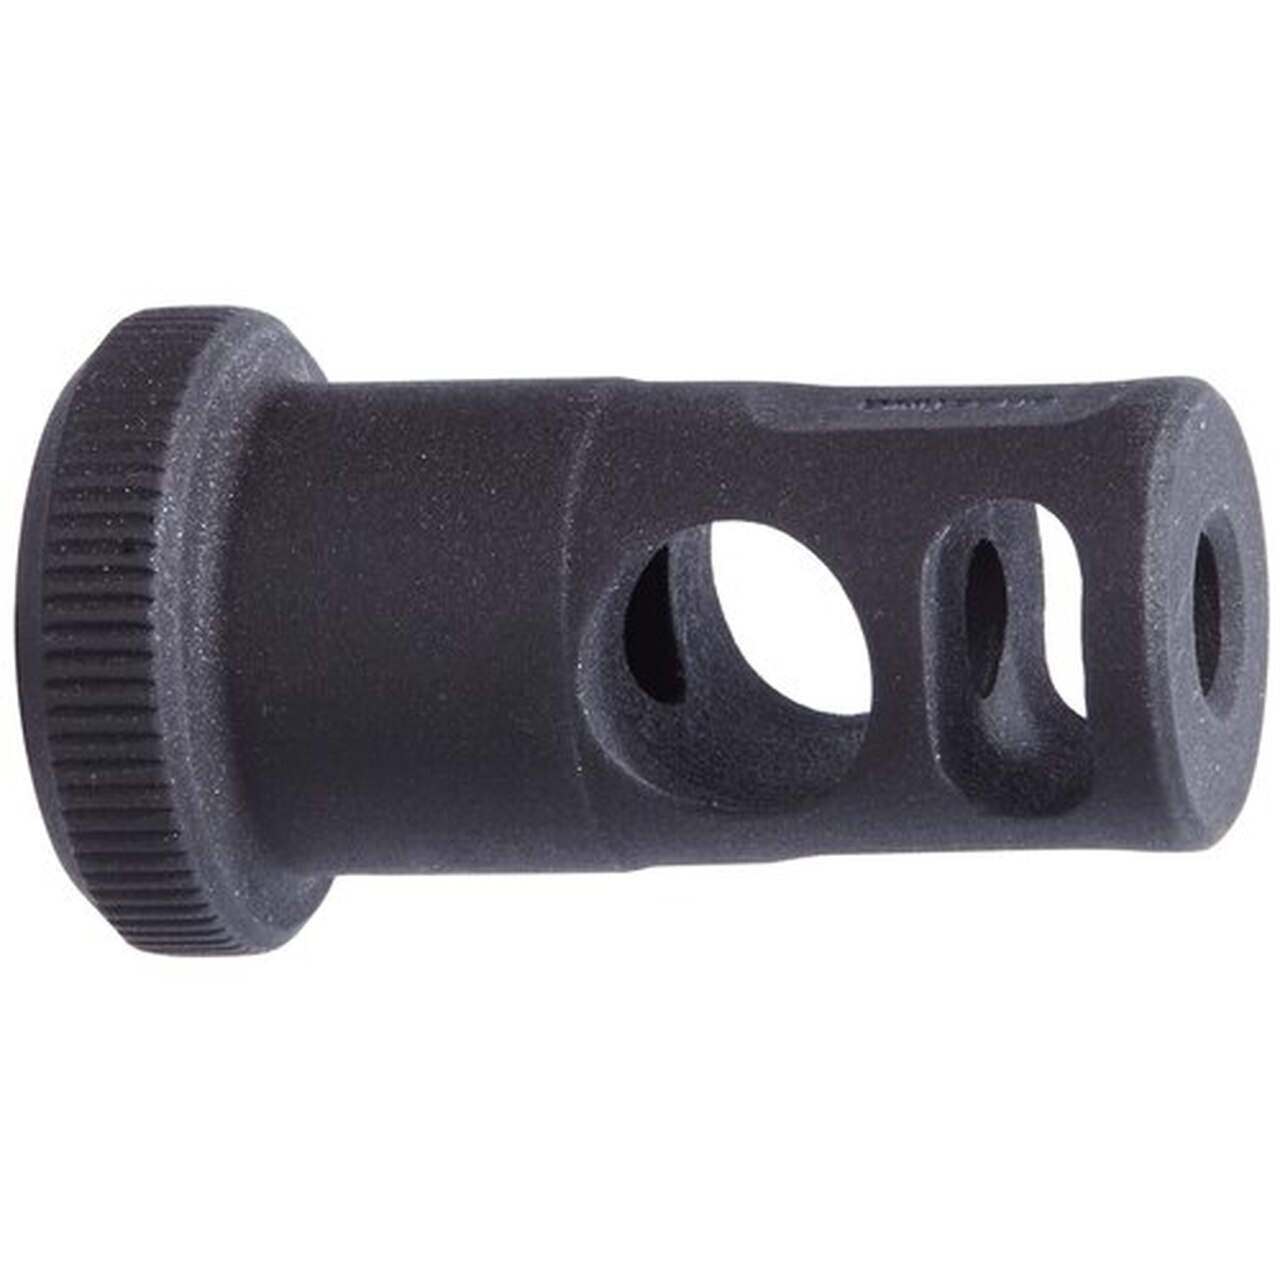 Image of Ghost Inc., AR-15 Muzzle Brake, 1/2 x 28 RH, Black